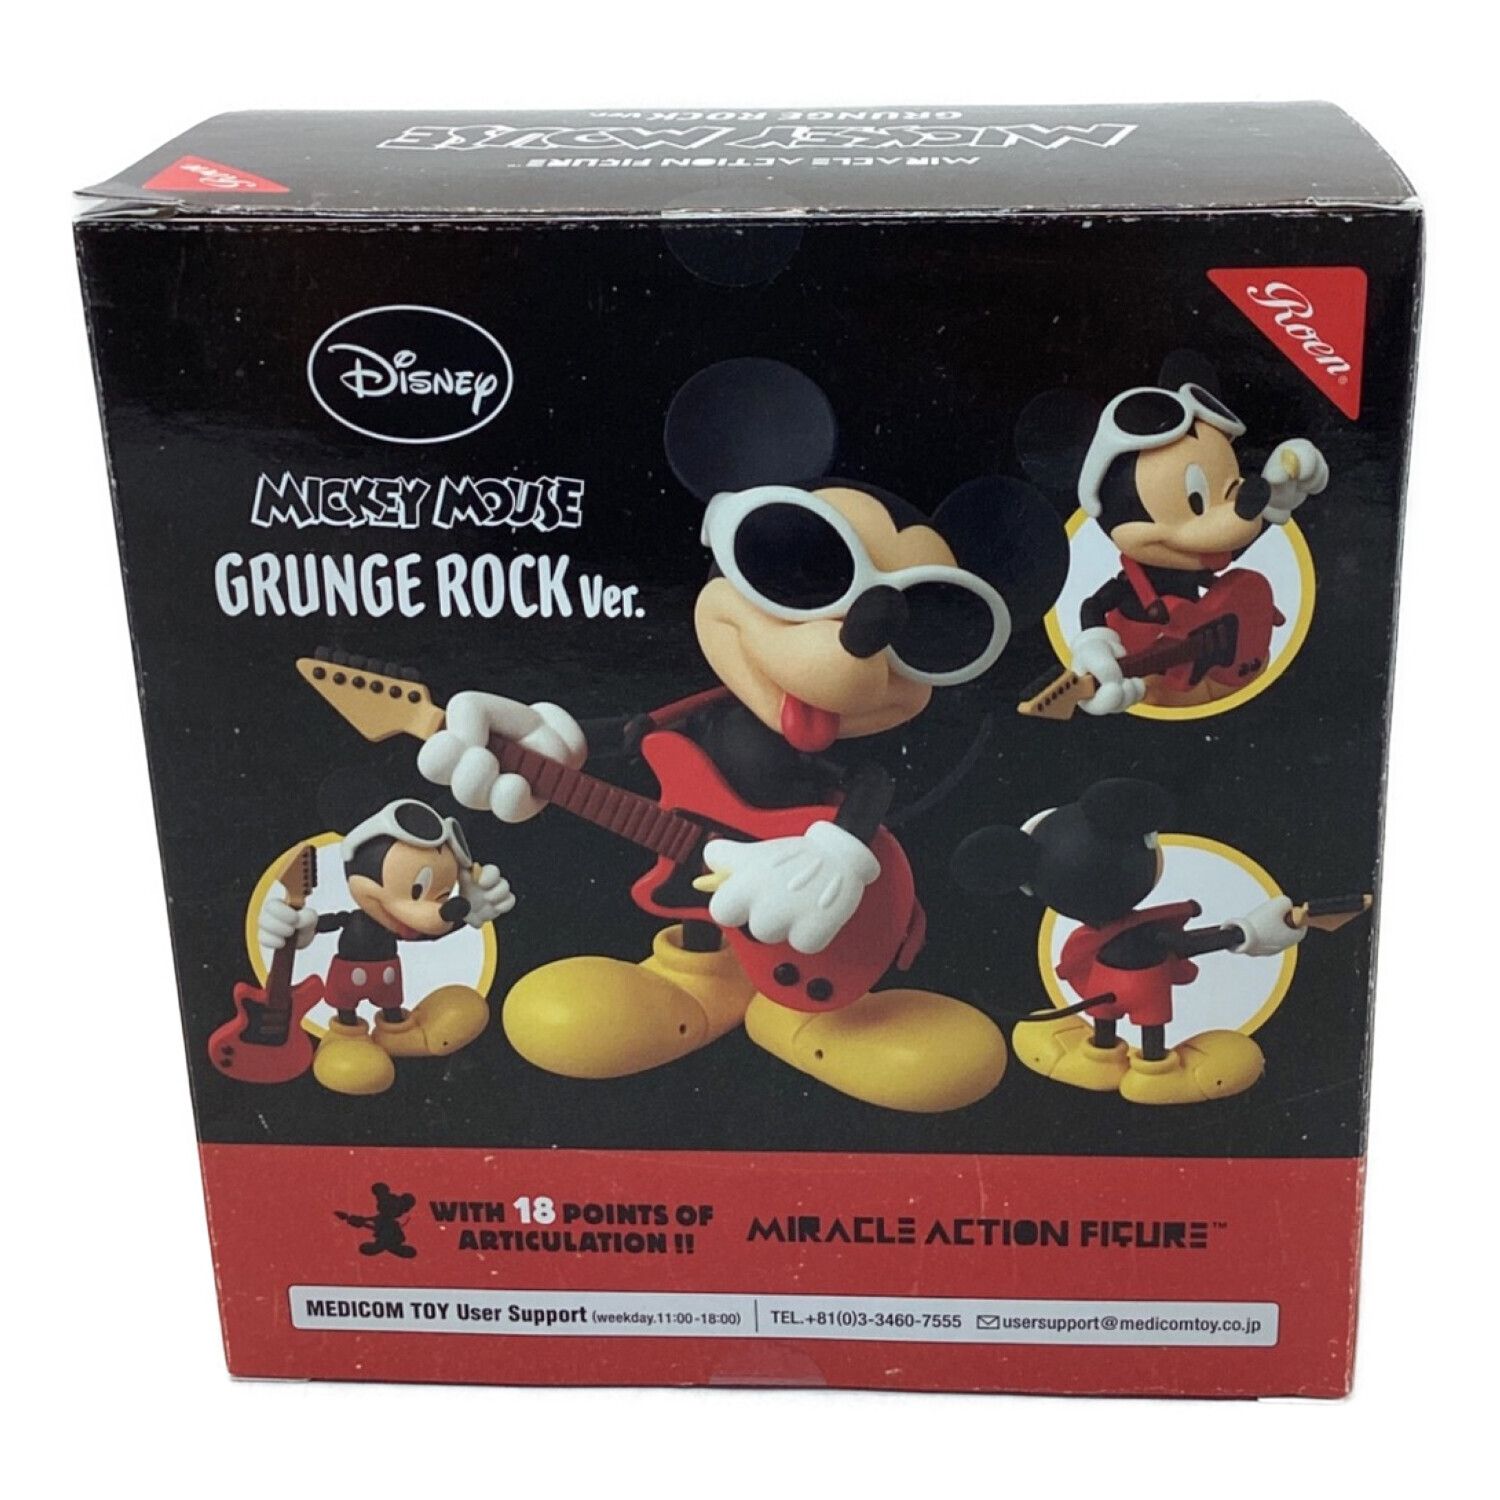 MEDICOM TOY (メディコム・トイ) フィギュア Disney Roen ミッキーマウス GRUNGE ROCK Ver.